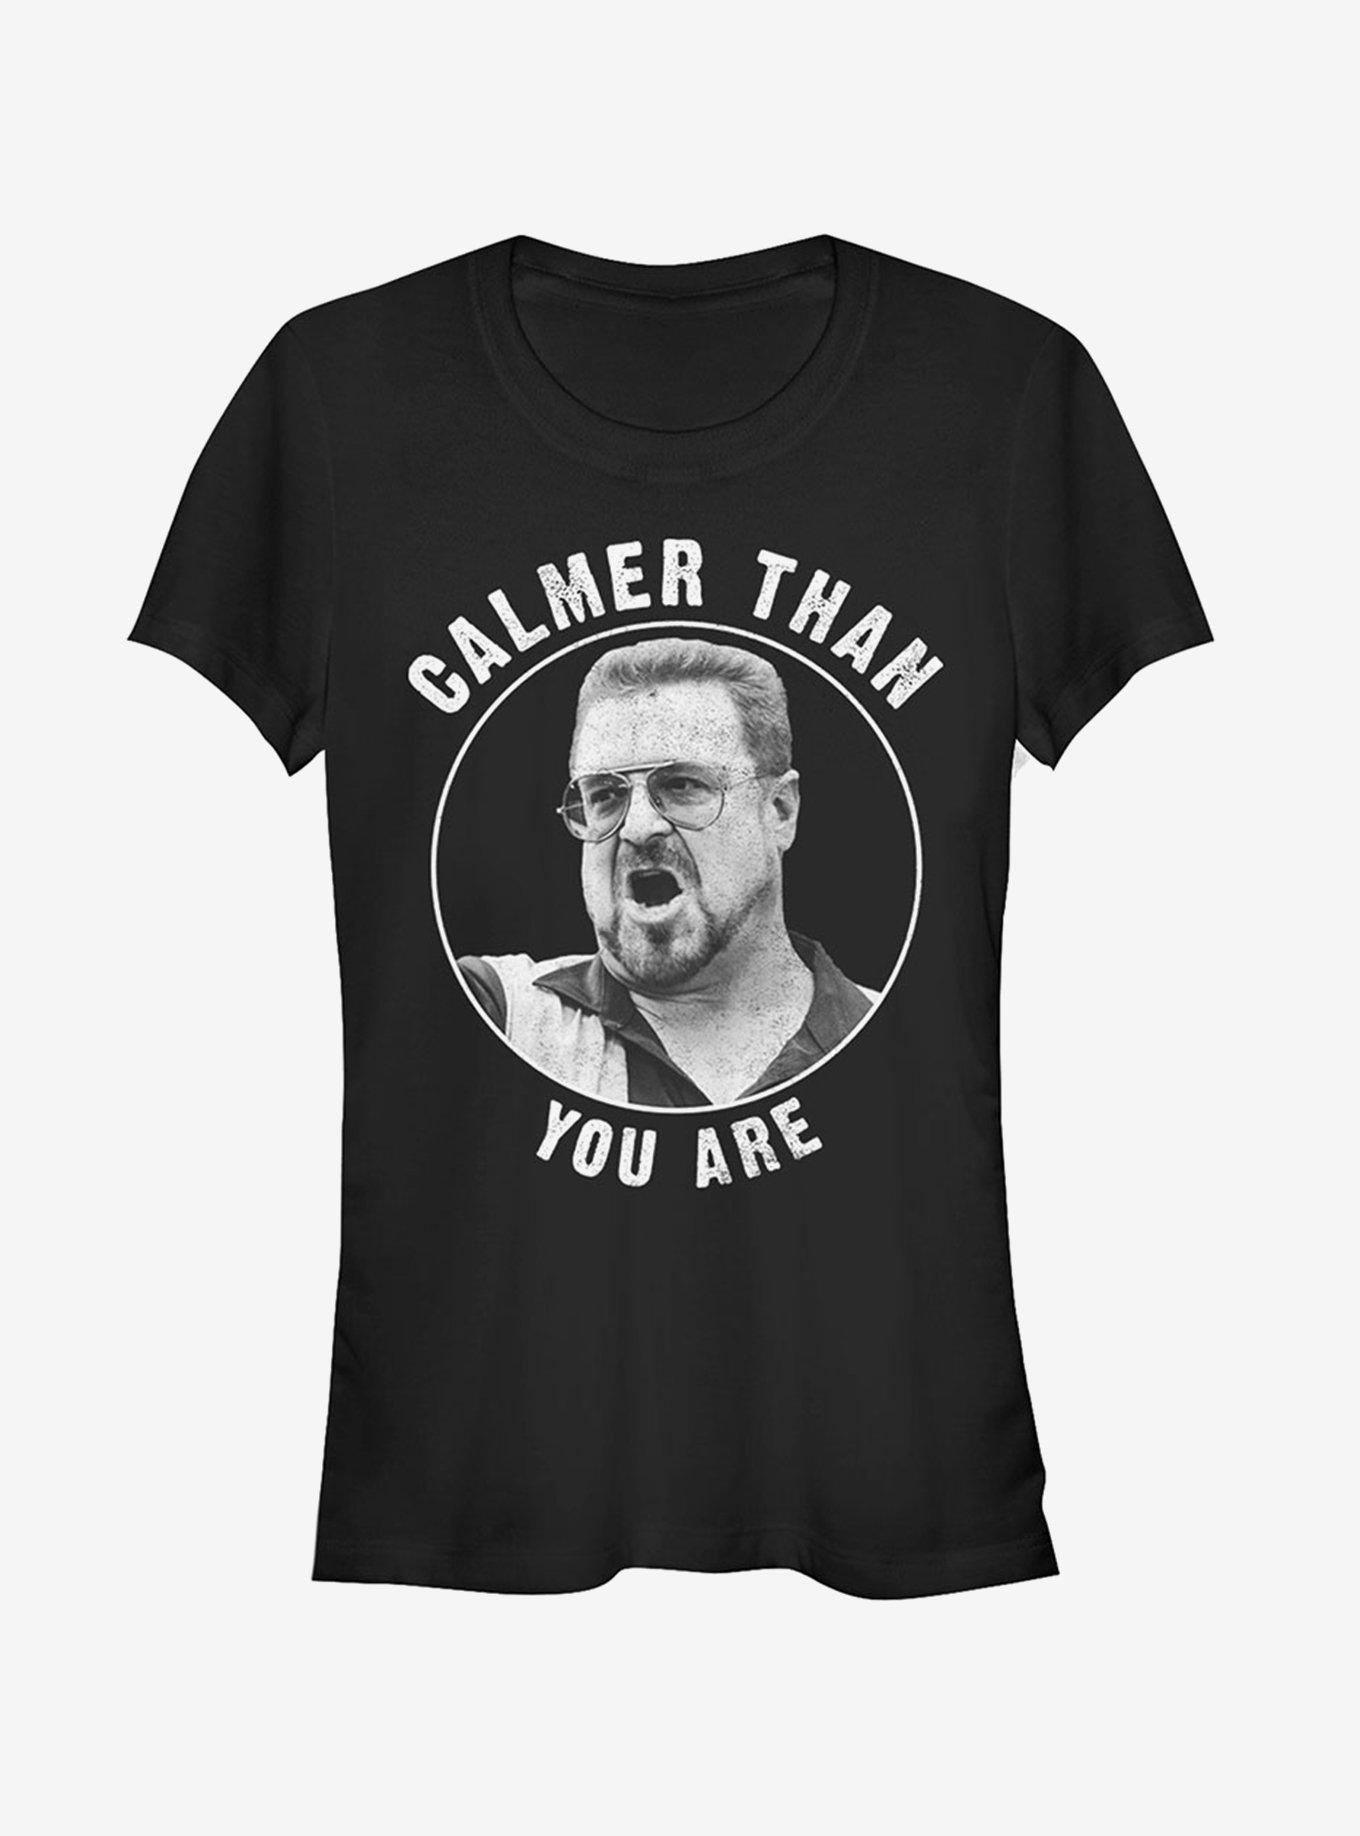 Walter Calmer Than You Girls T-Shirt, BLACK, hi-res